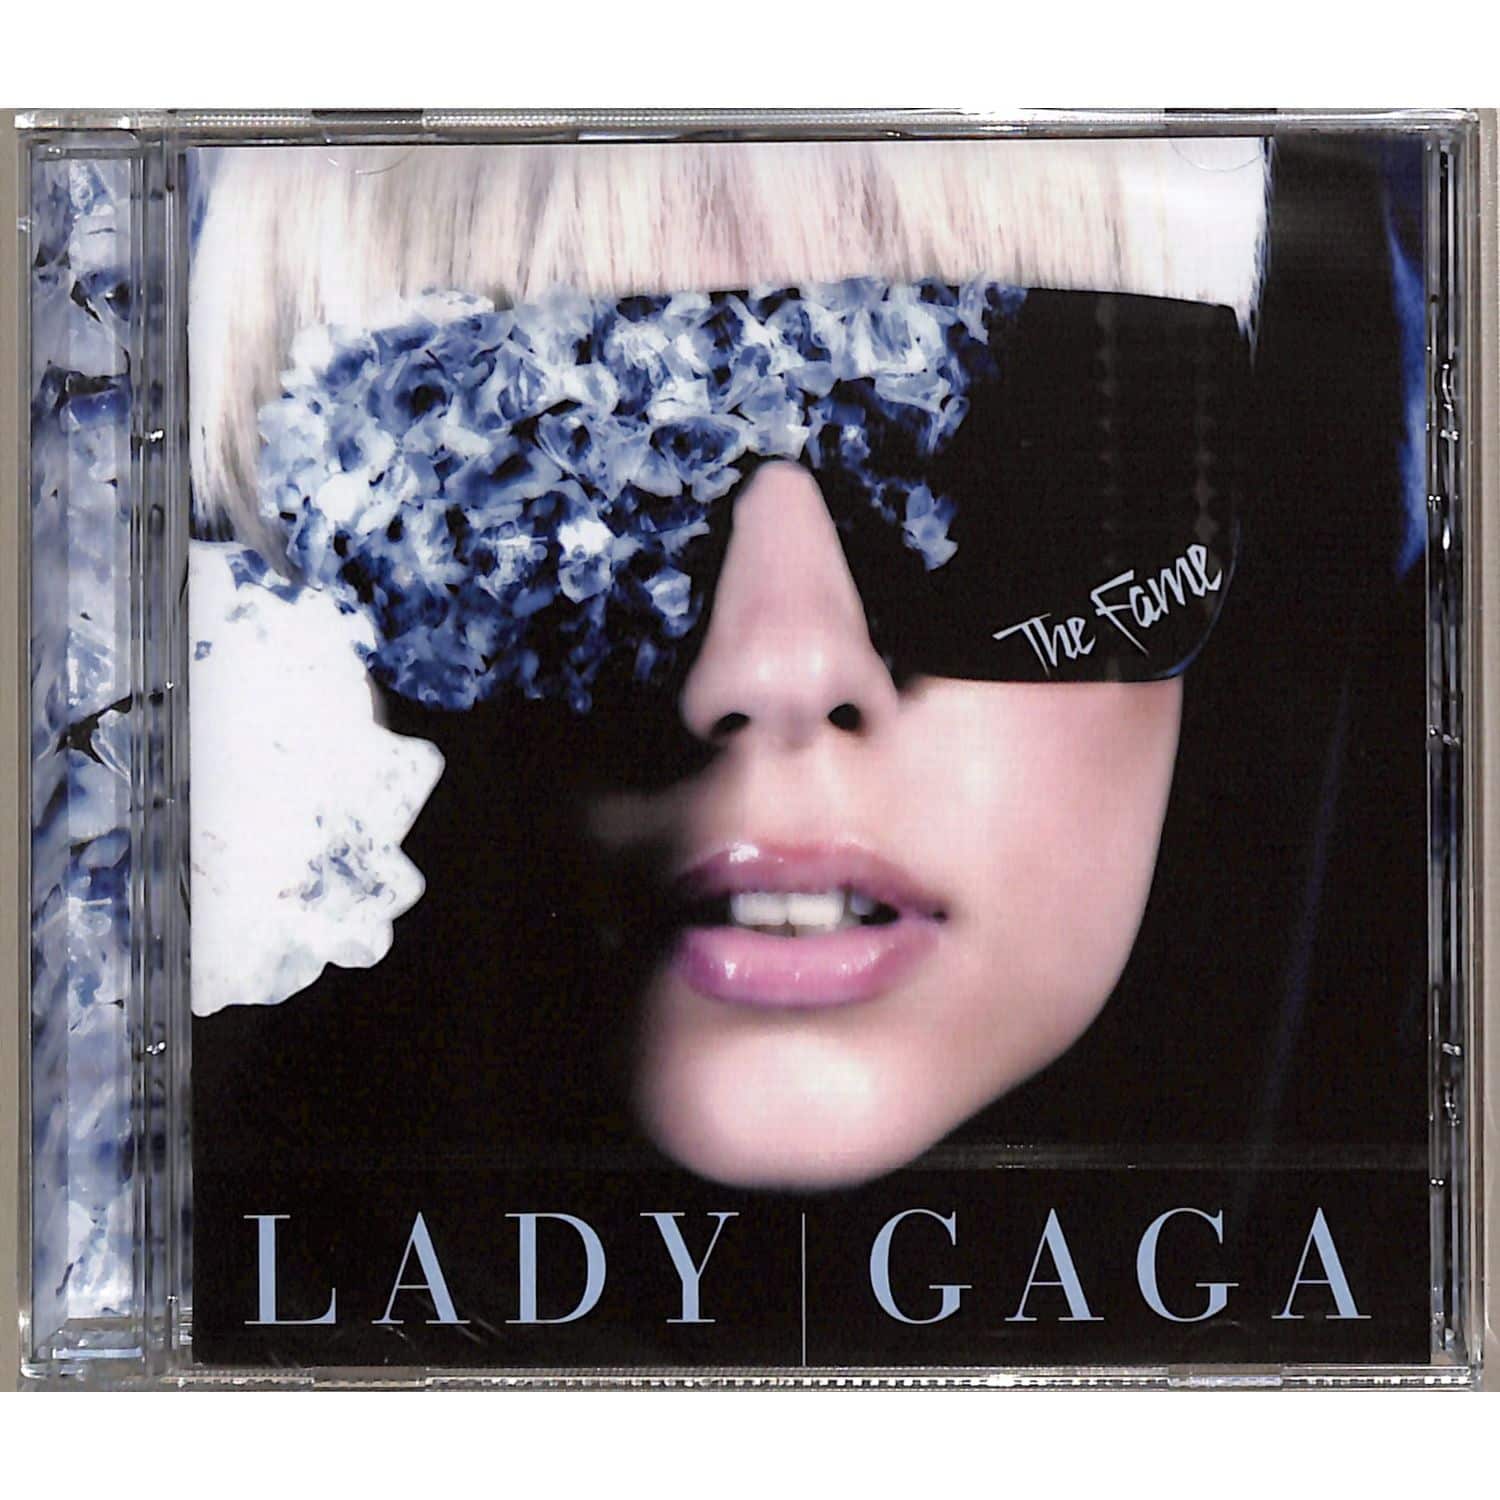 Lady Gaga - THE FAME 